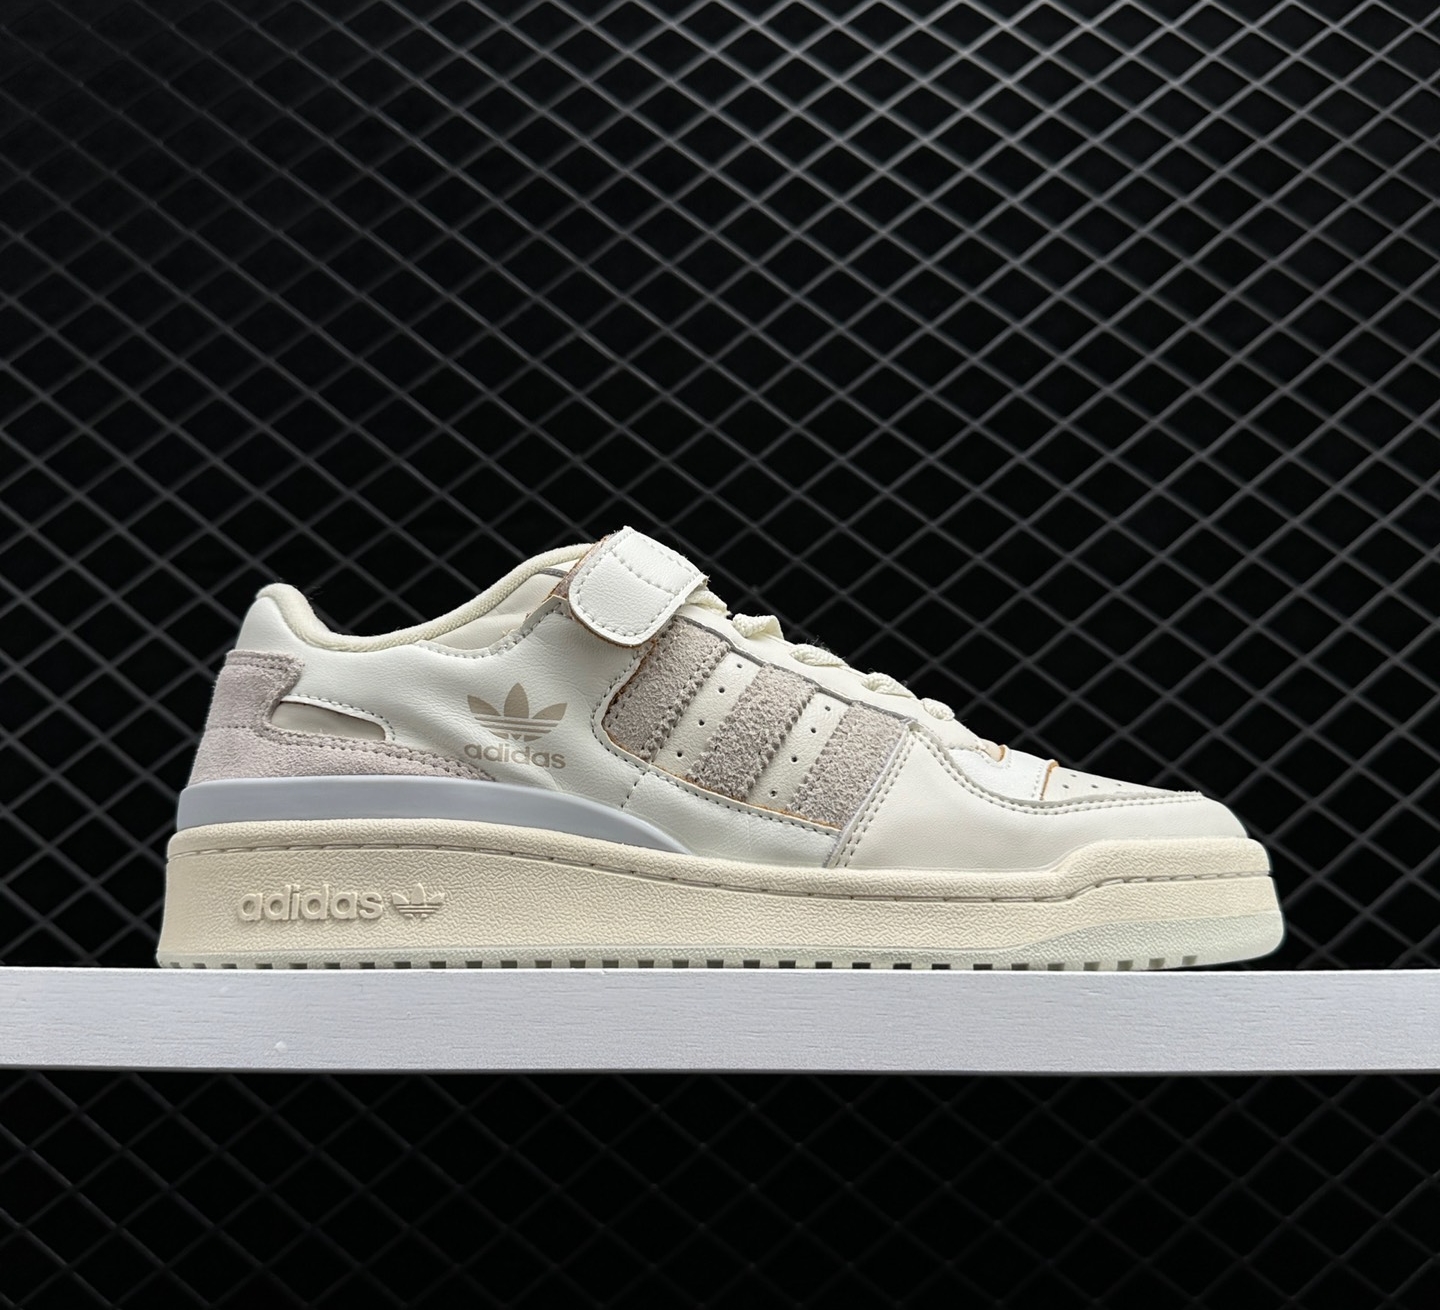 Adidas Forum 84 Low Orbit Grey FY4577 - Premium Sneakers for Modern Style